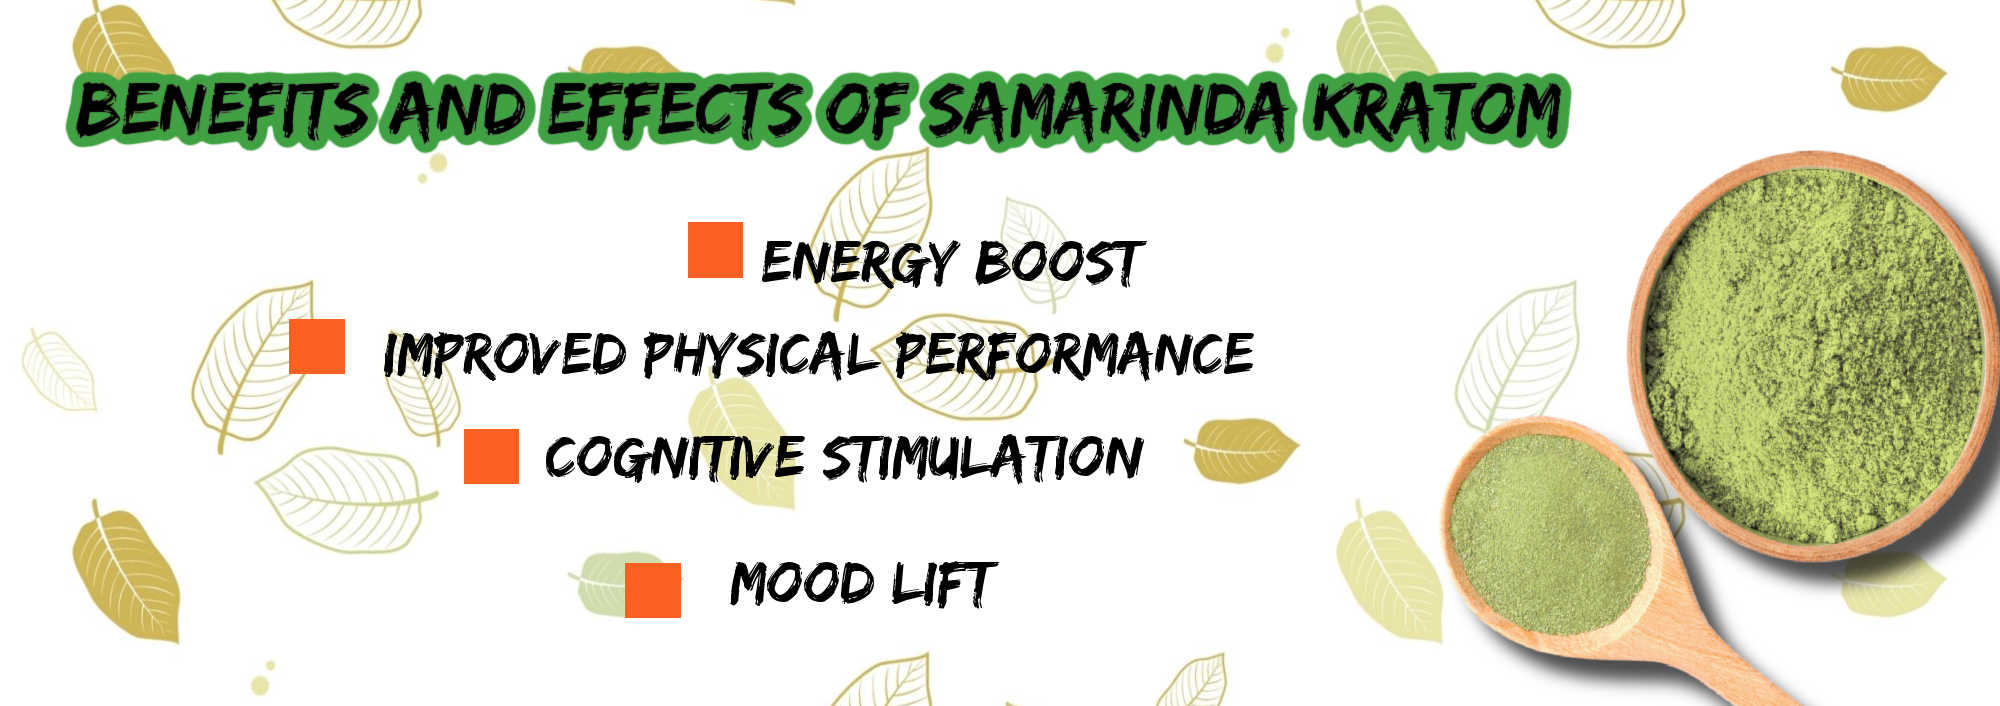 image of samarinda kratom benefits and effects